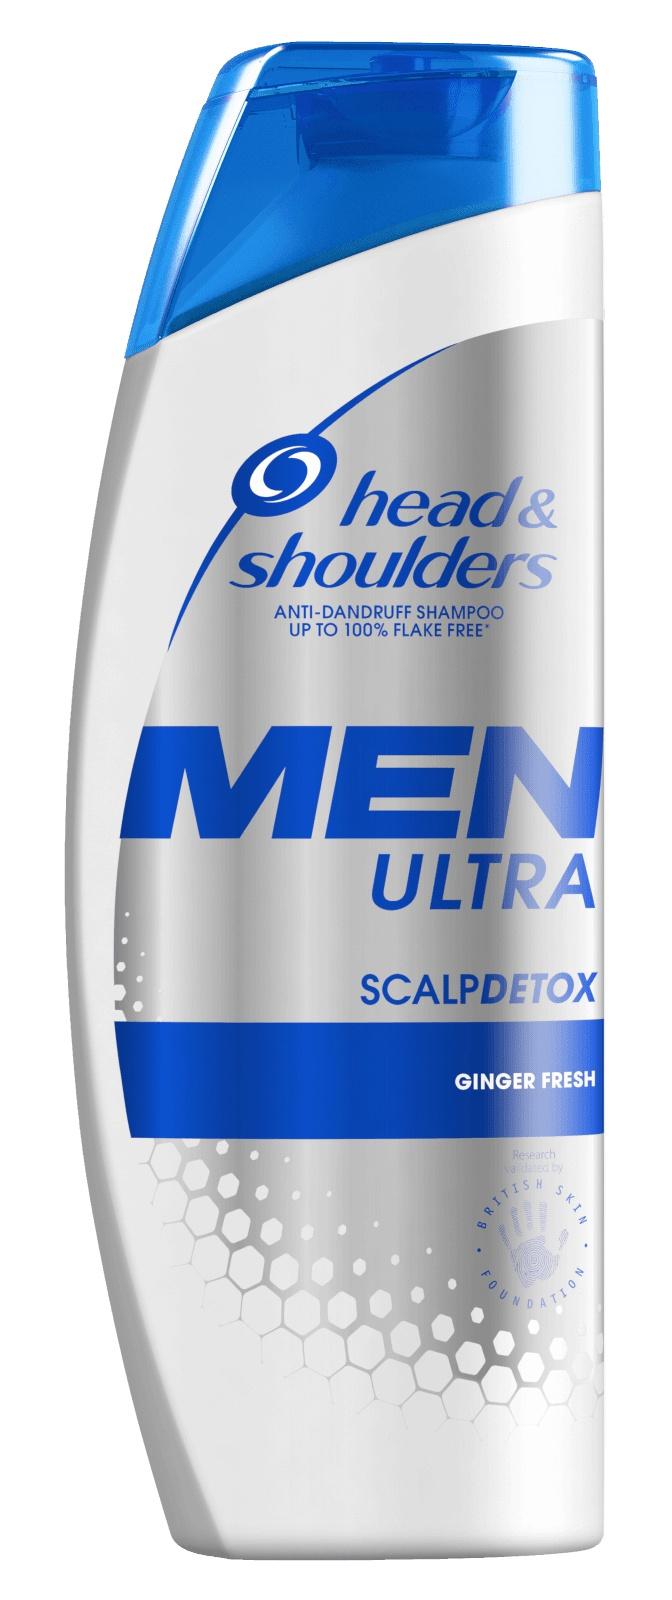 Head & shoulders men ultra